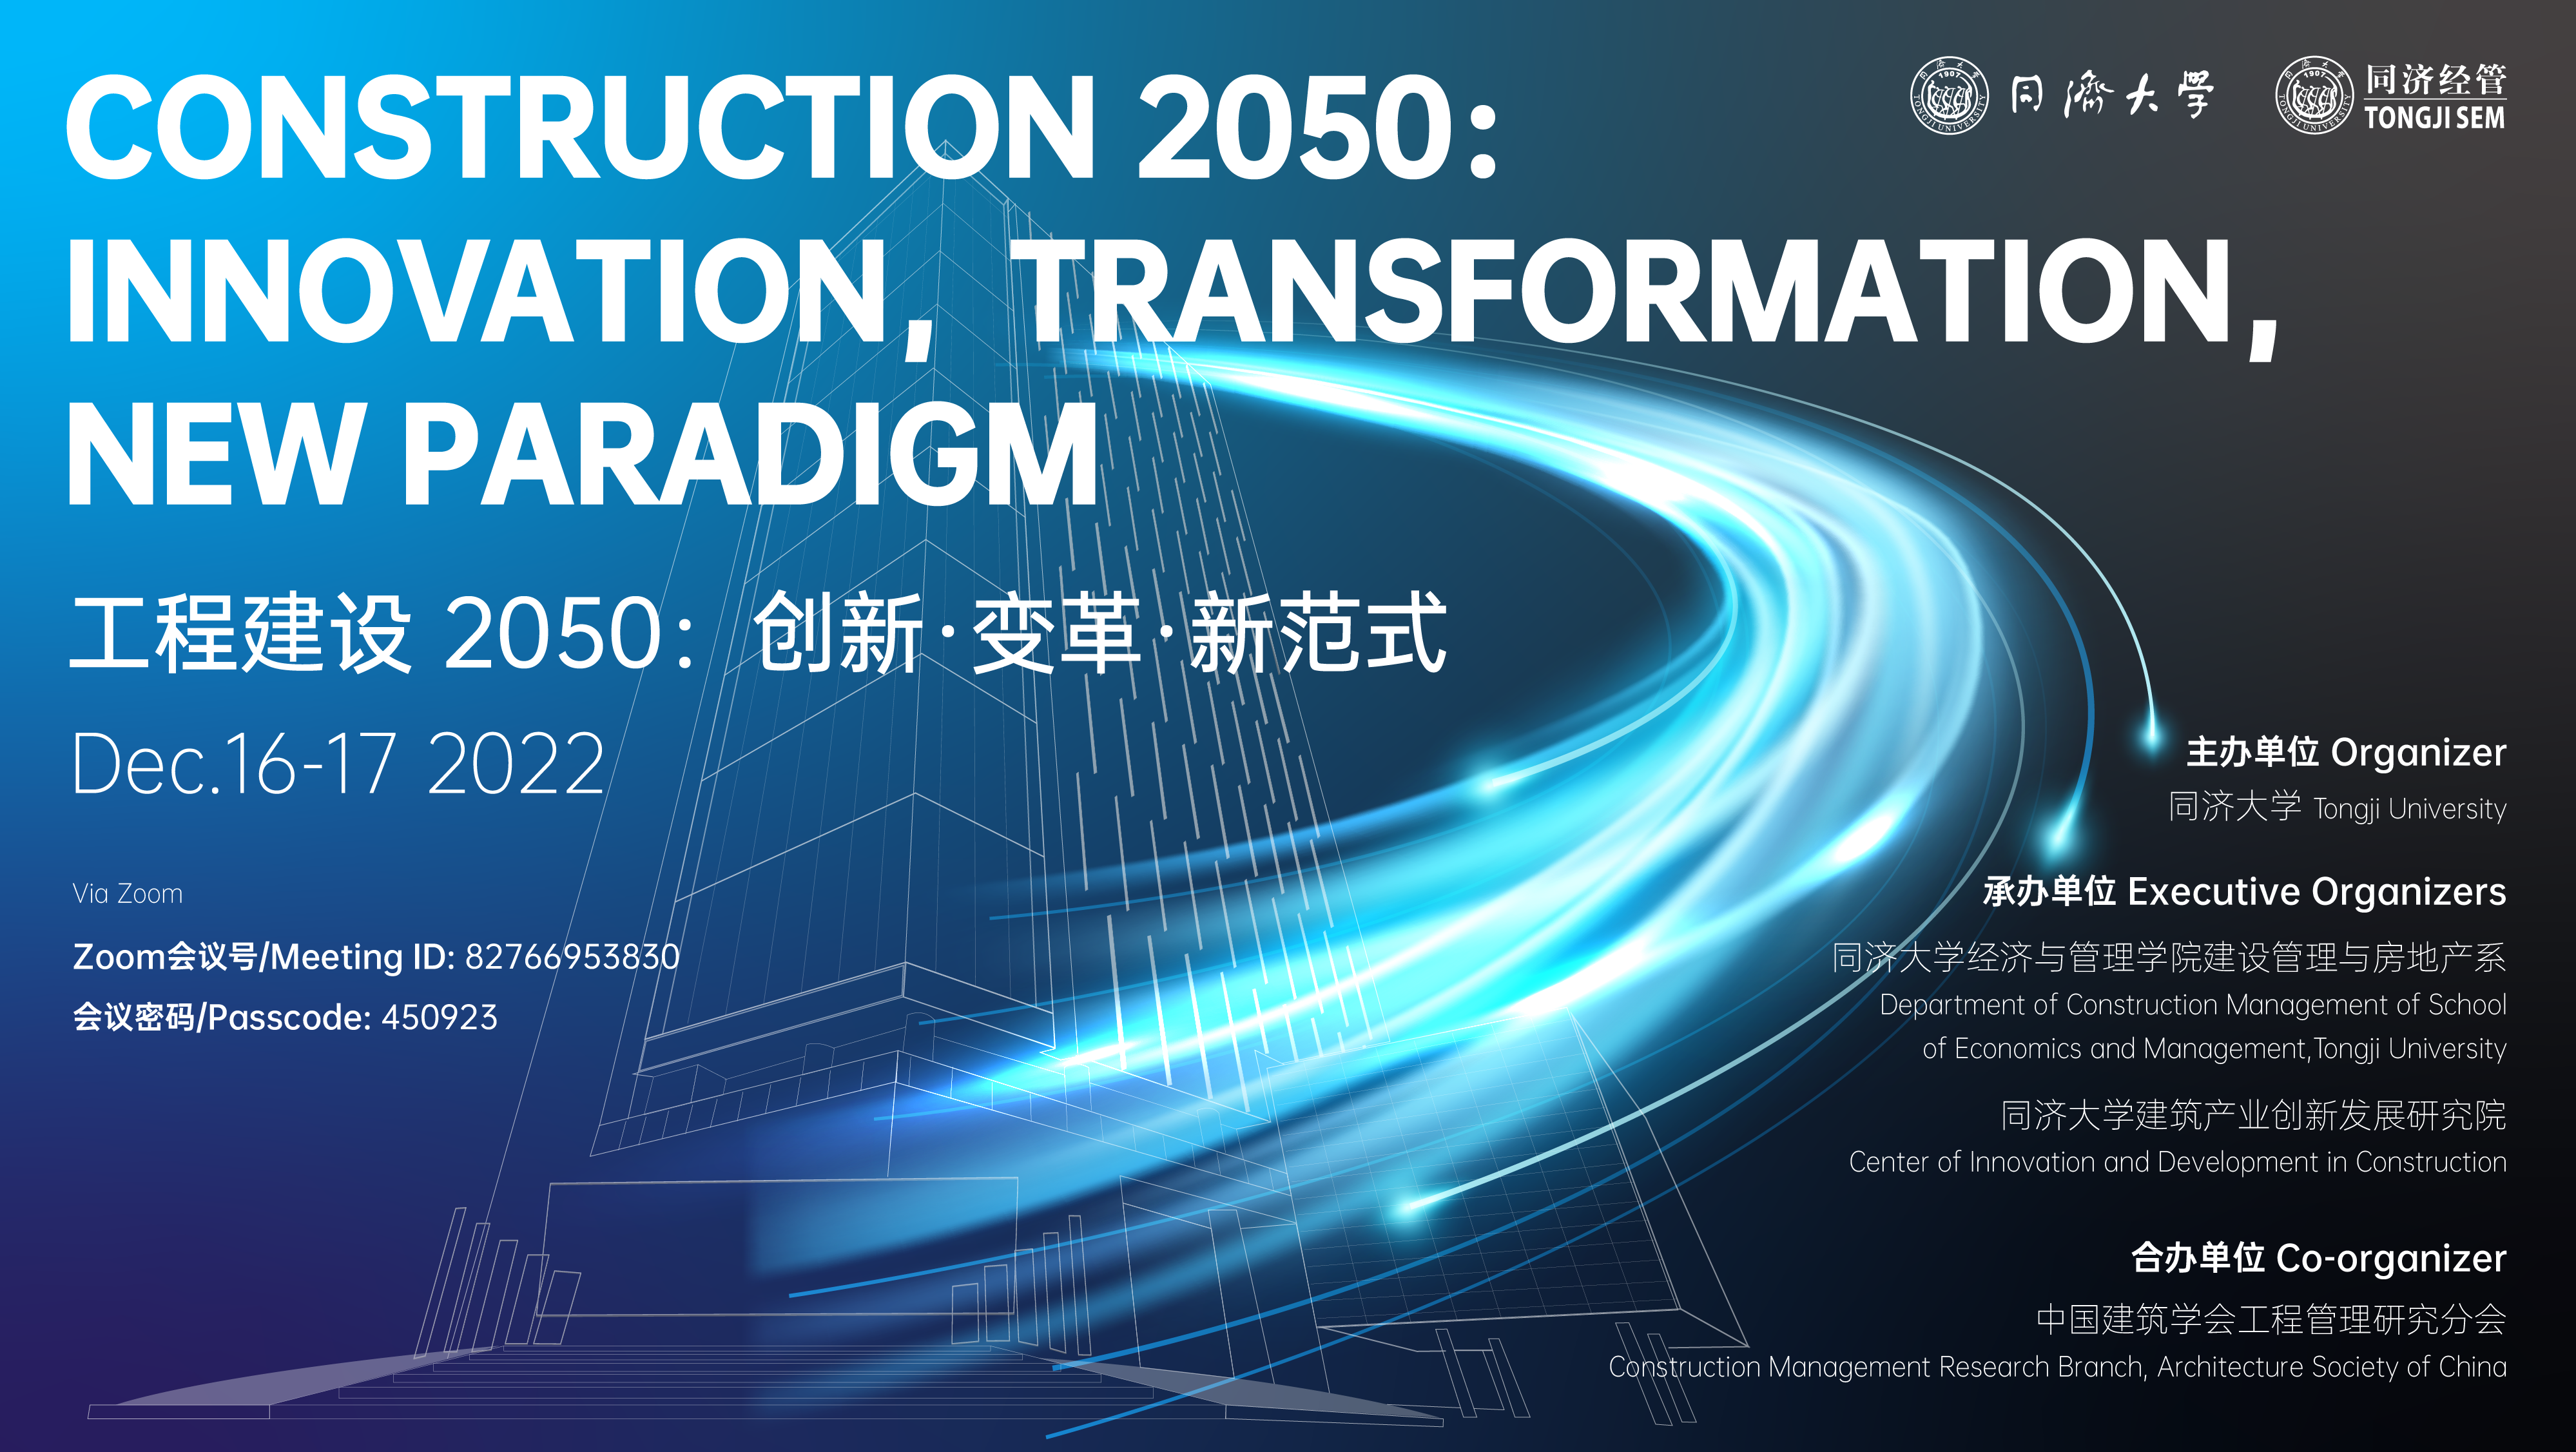 The International Forum “Construction 2050: Innovation, Transformation, New Paradigm” Is Successfully Held